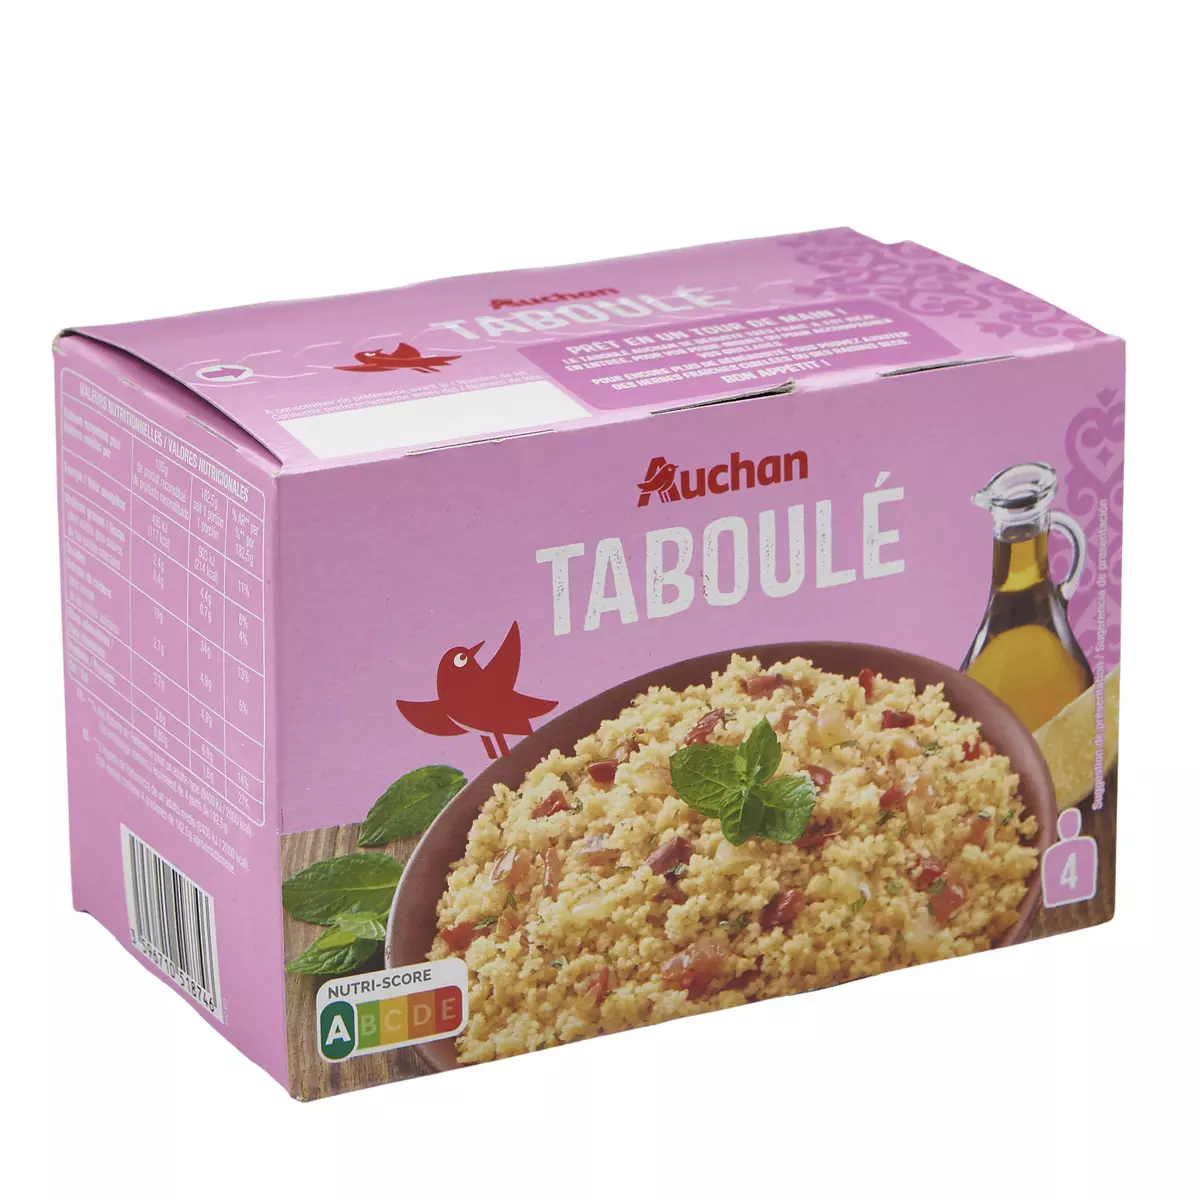 AUCHAN Taboulé 4 portions 730g